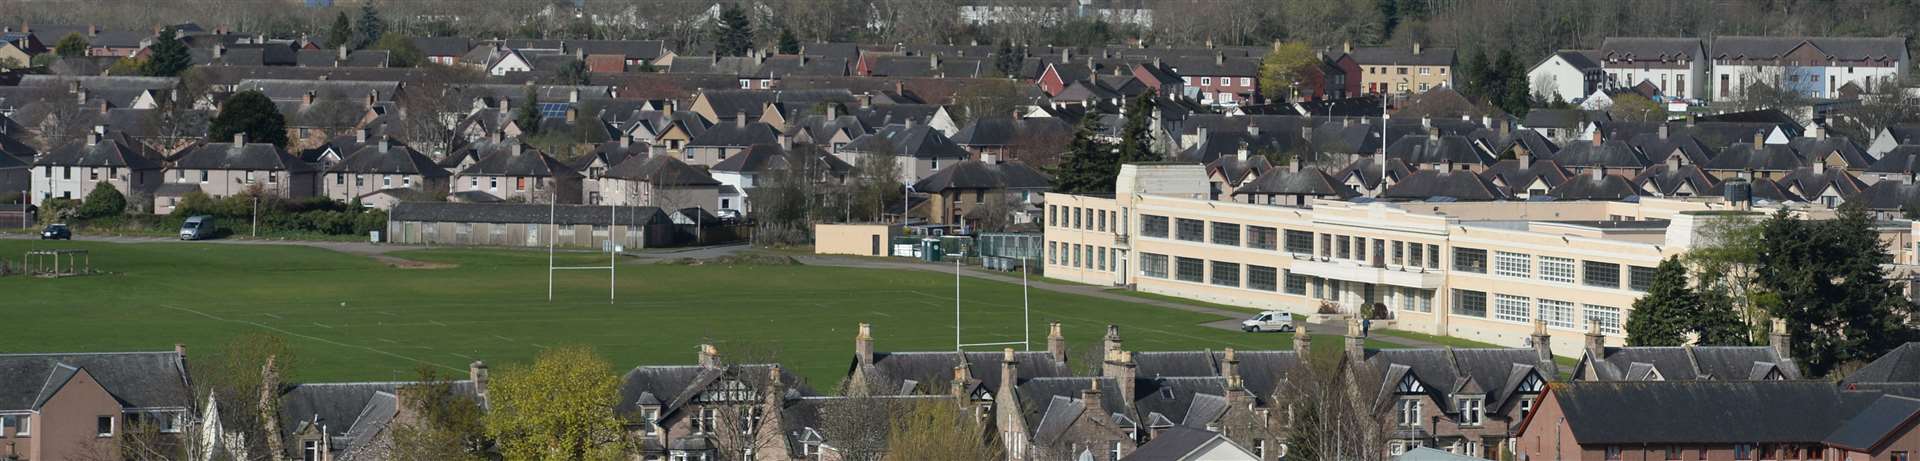 Inverness High School.